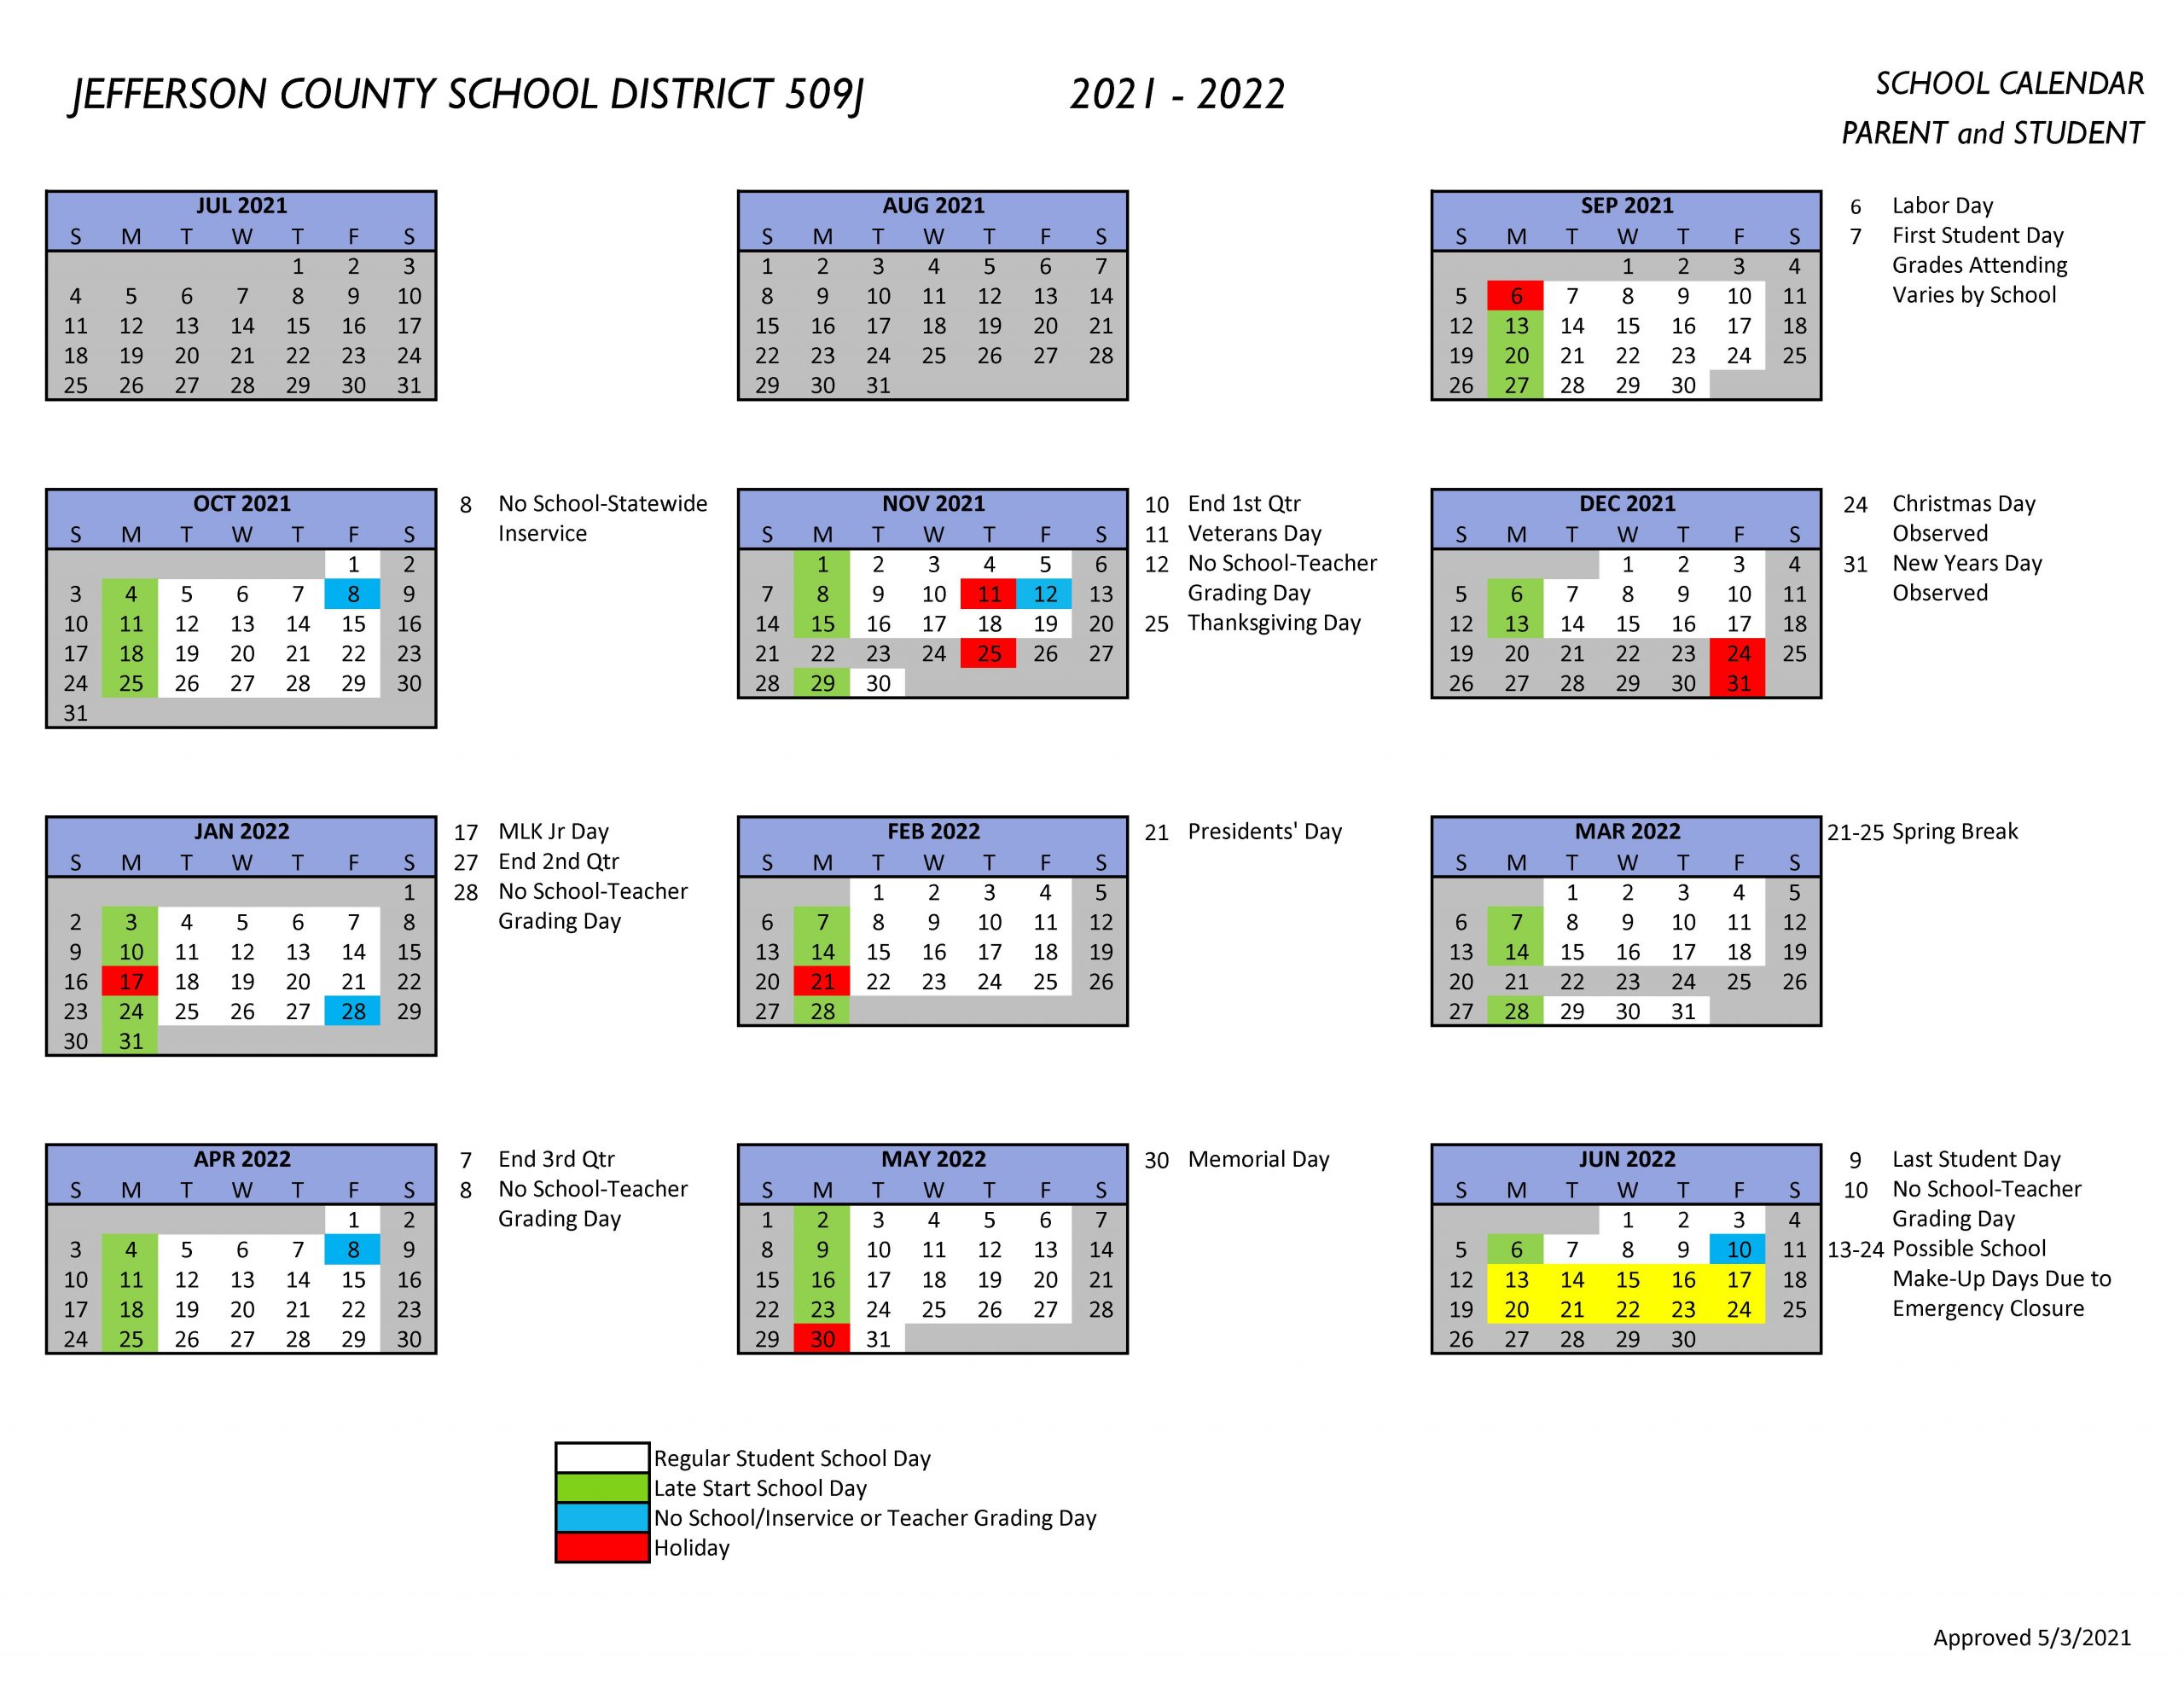 School District Calendar | Jefferson County School